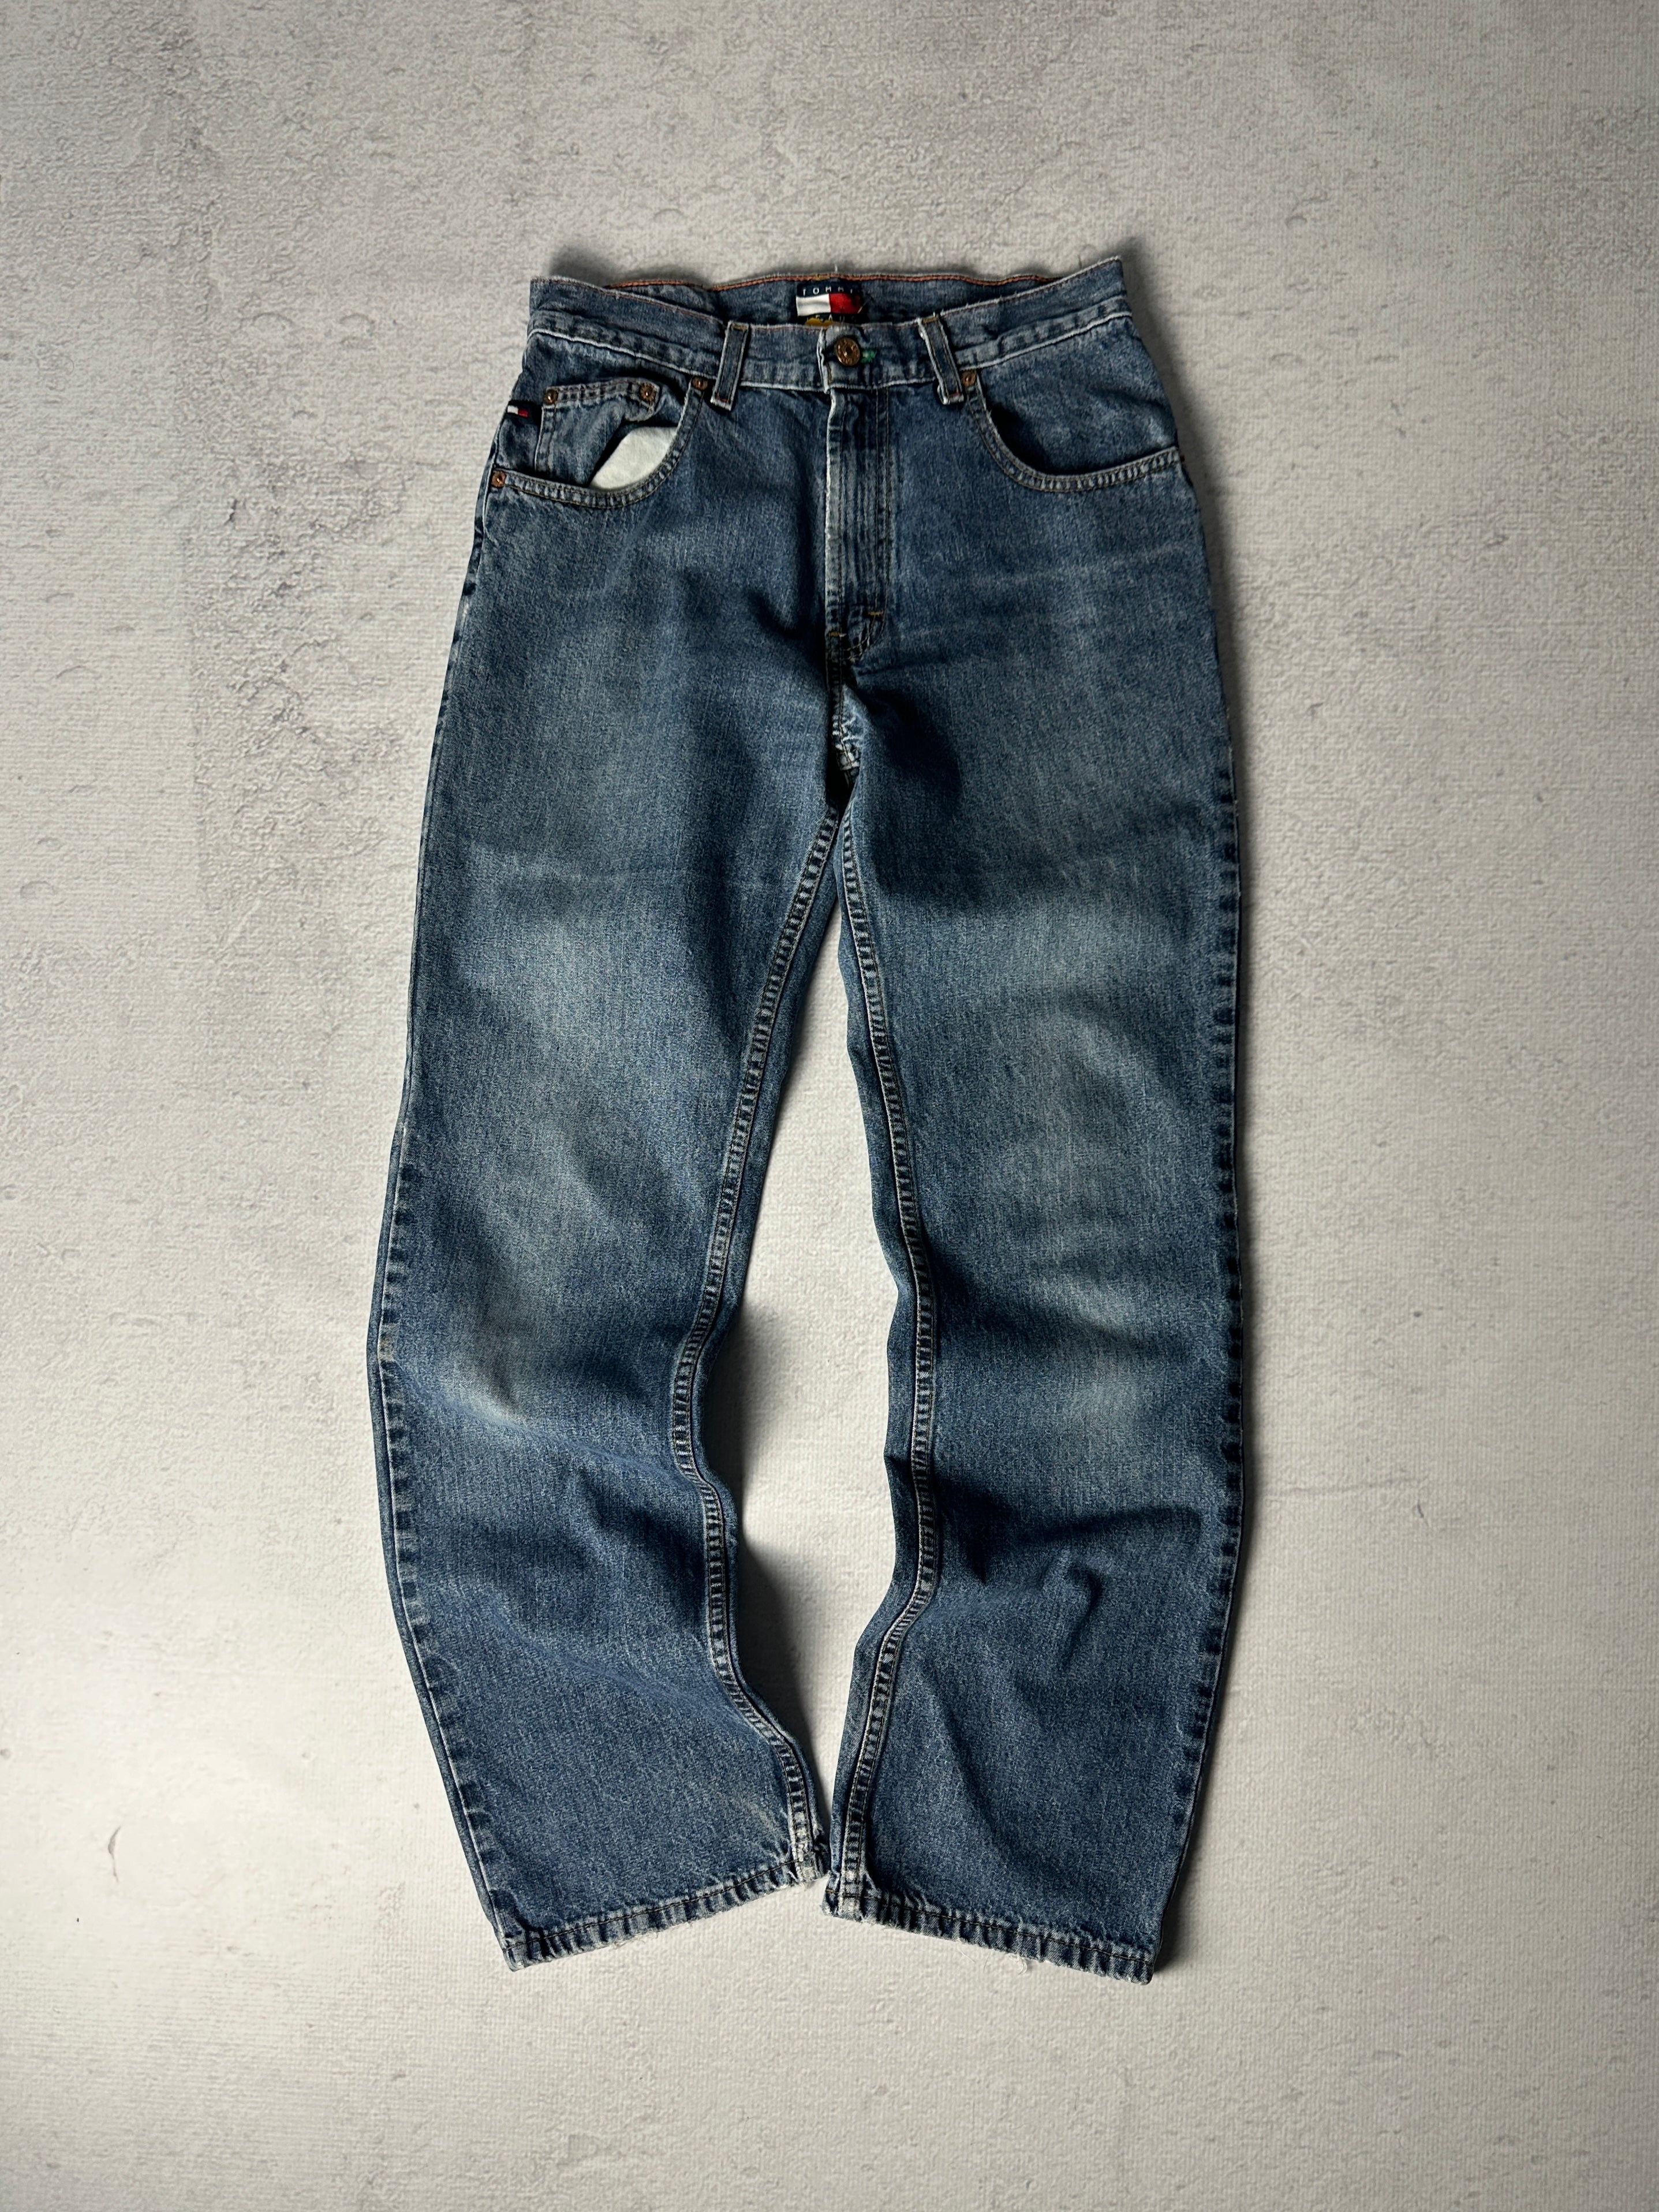 Vintage Tommy Hilfiger Jeans - Men's 30W32L